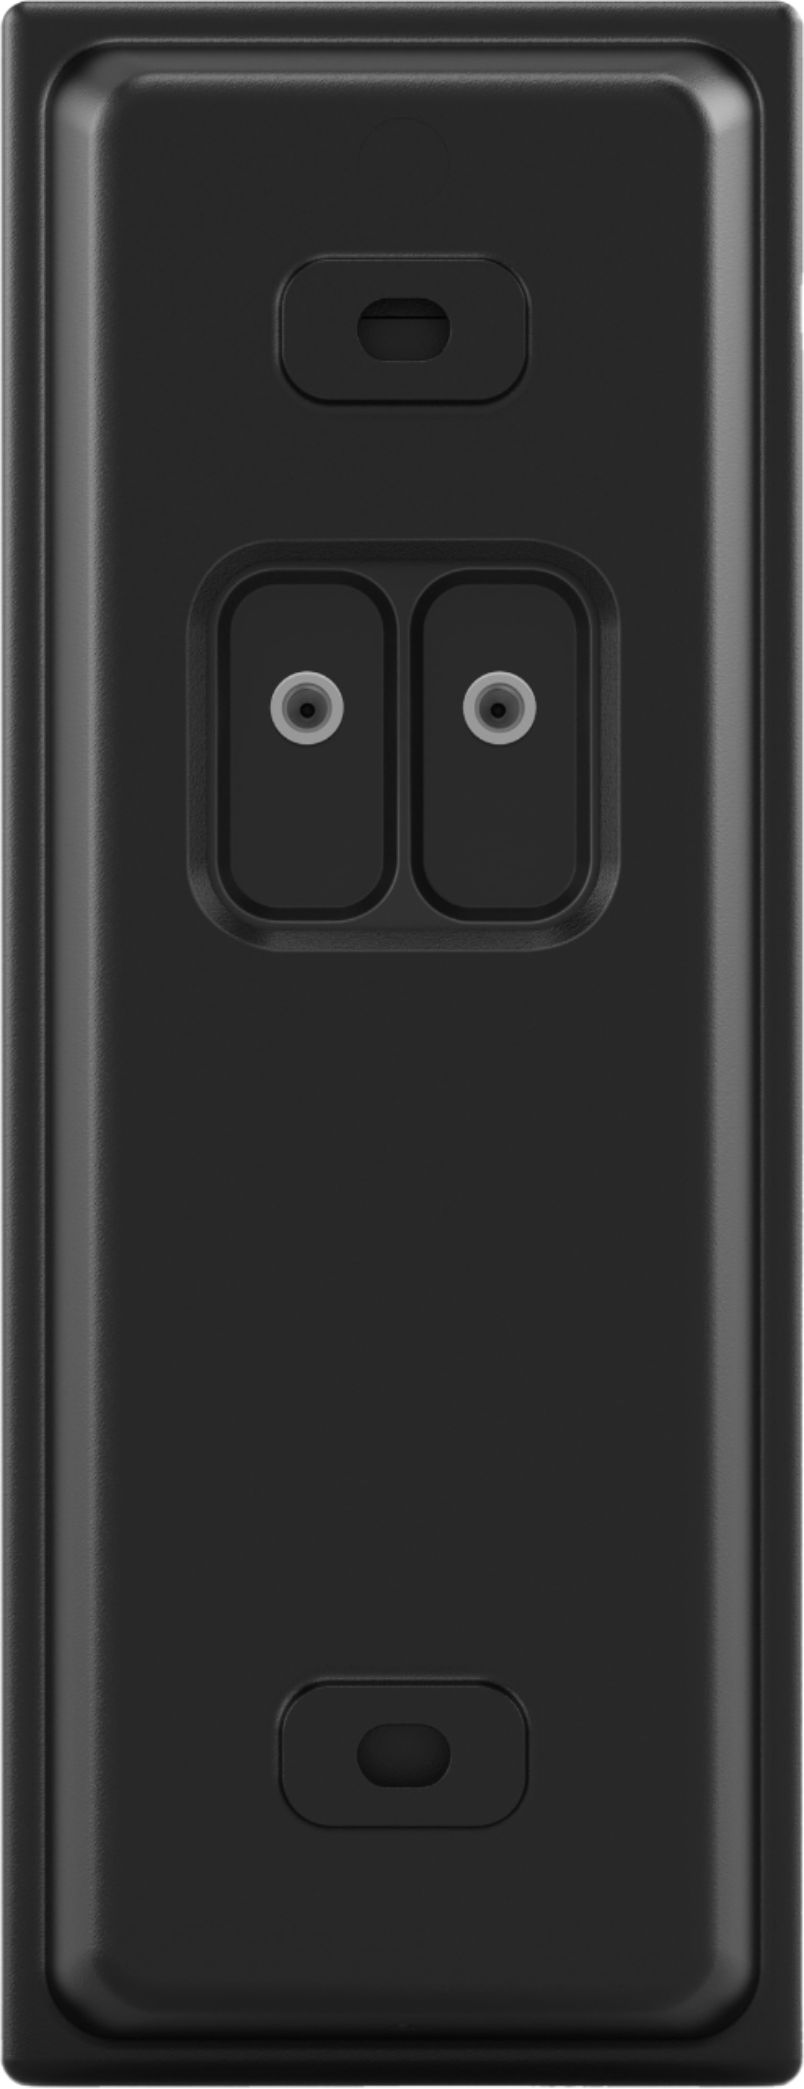 Left View: Lorex - 1080p Video Doorbell and Sensor Kit - White